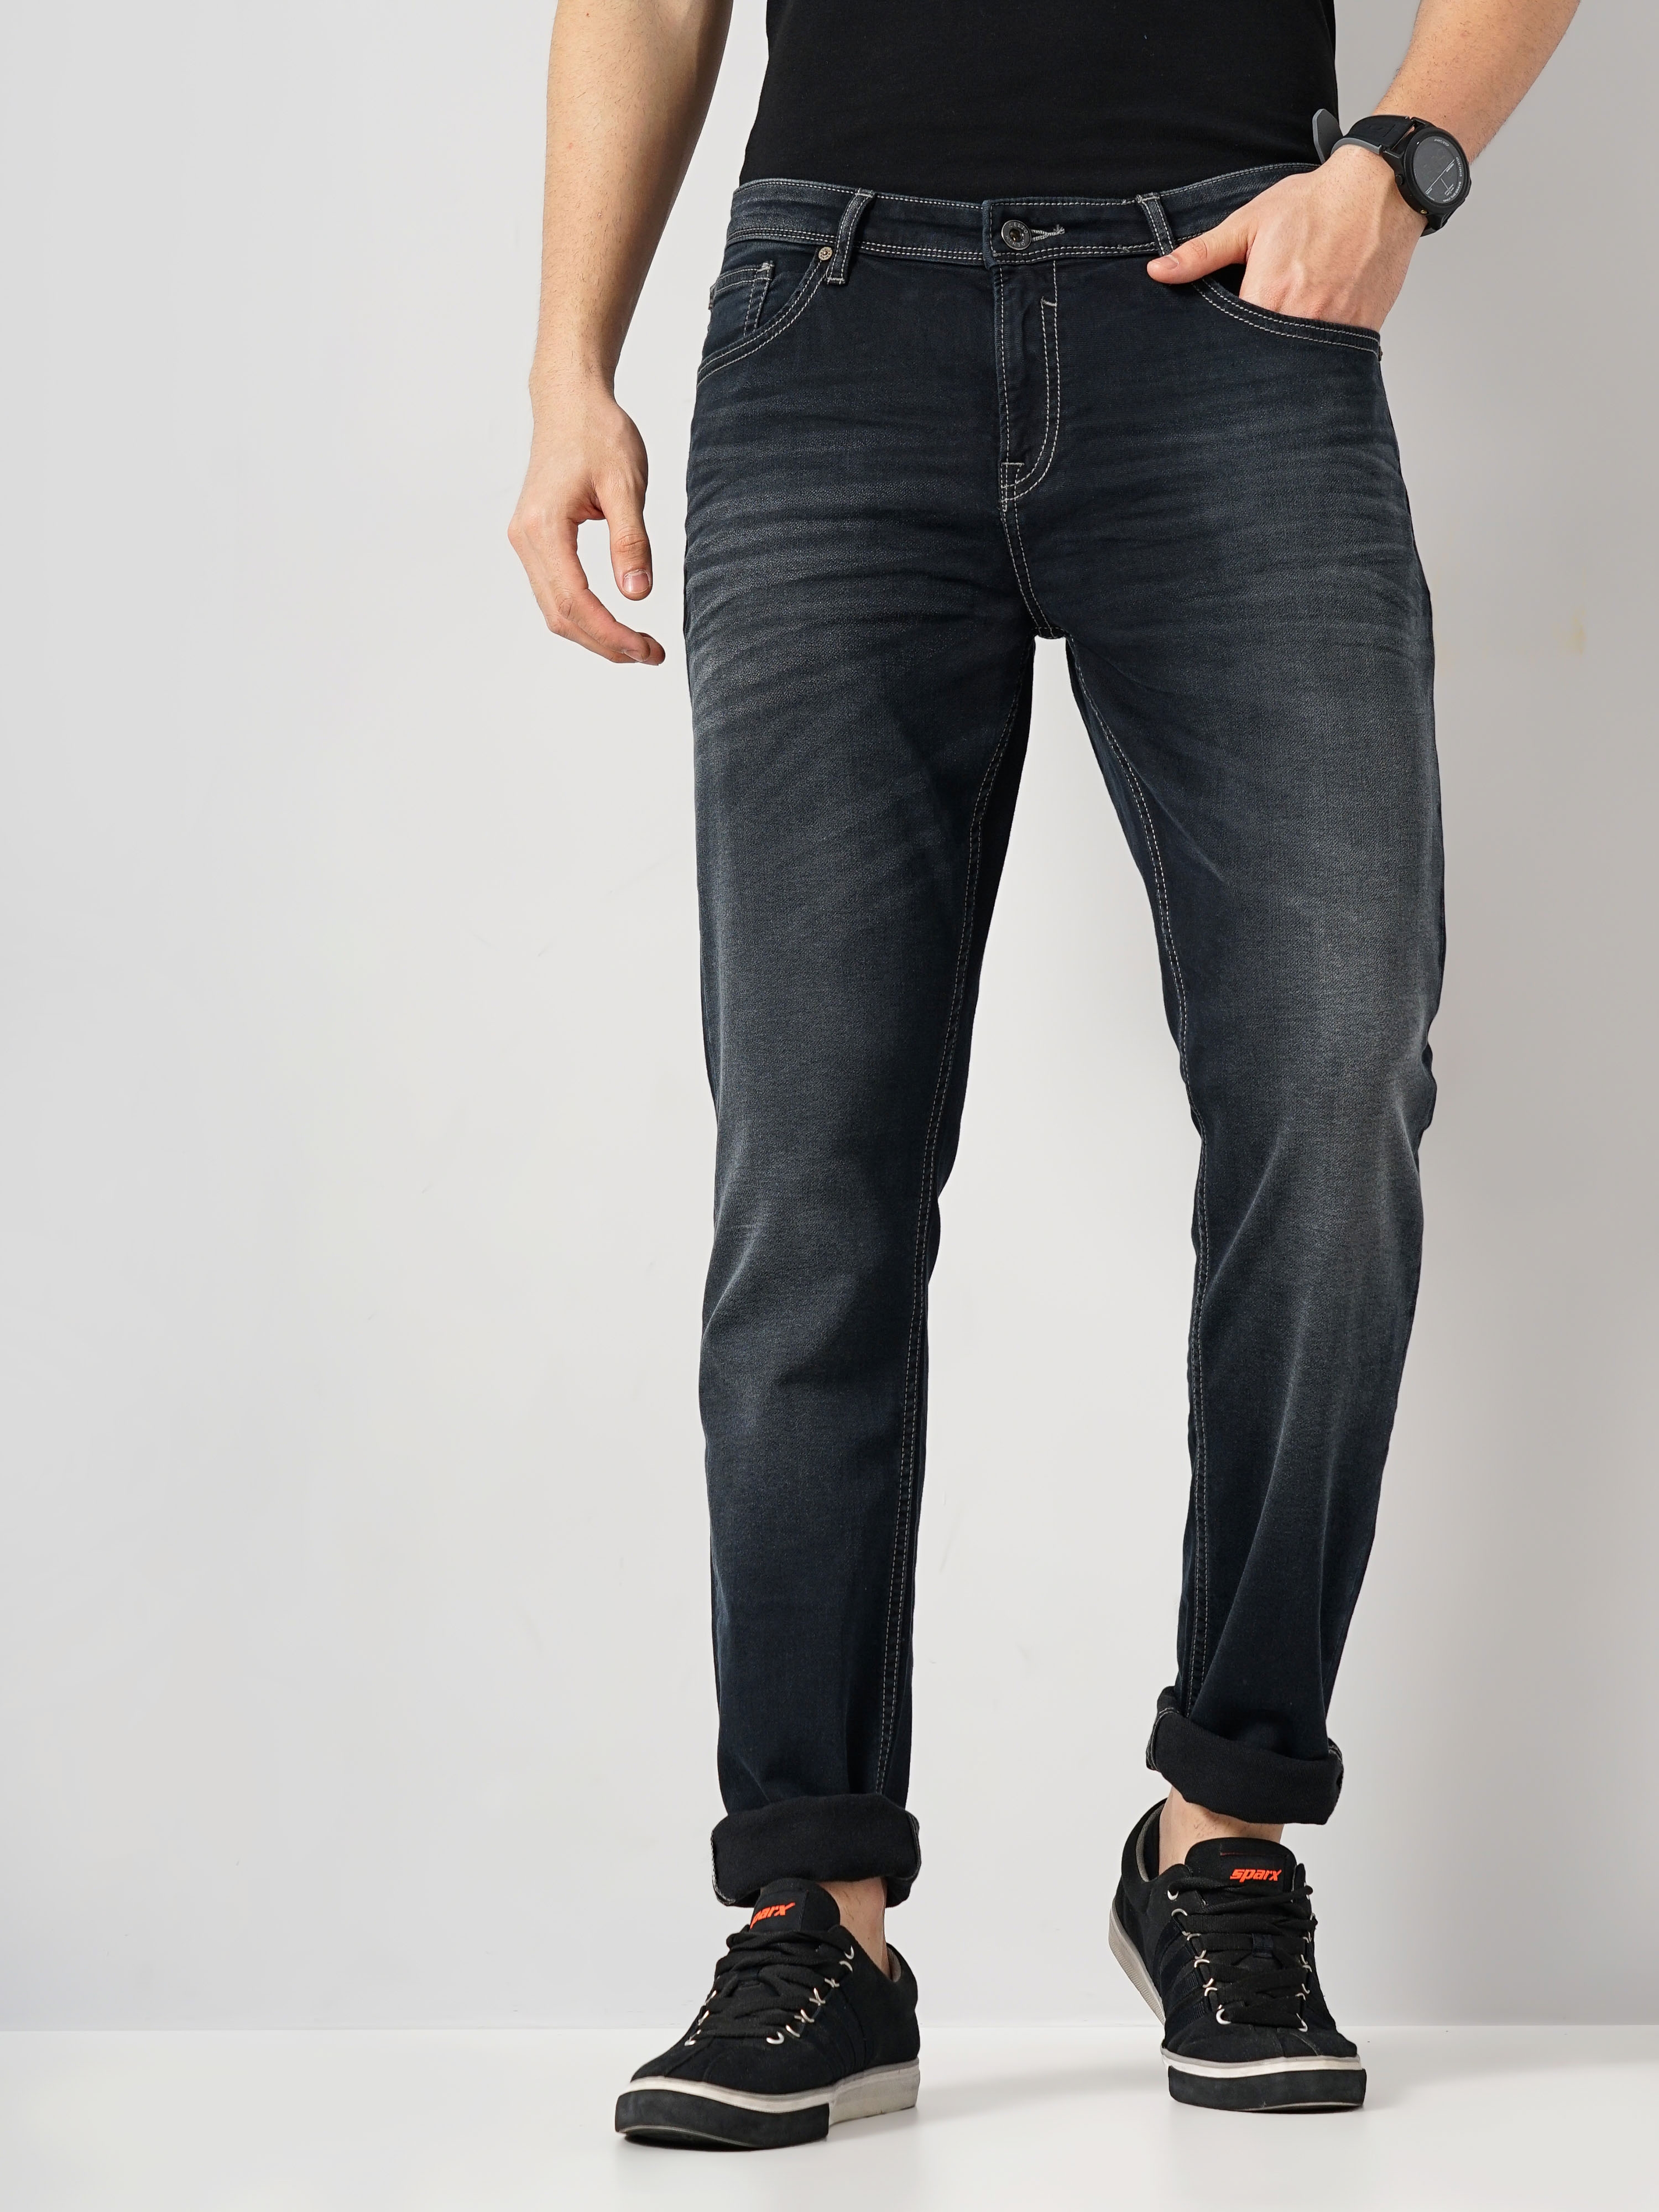 Black Wash Slim Fit Comfort Jeans – True Classic